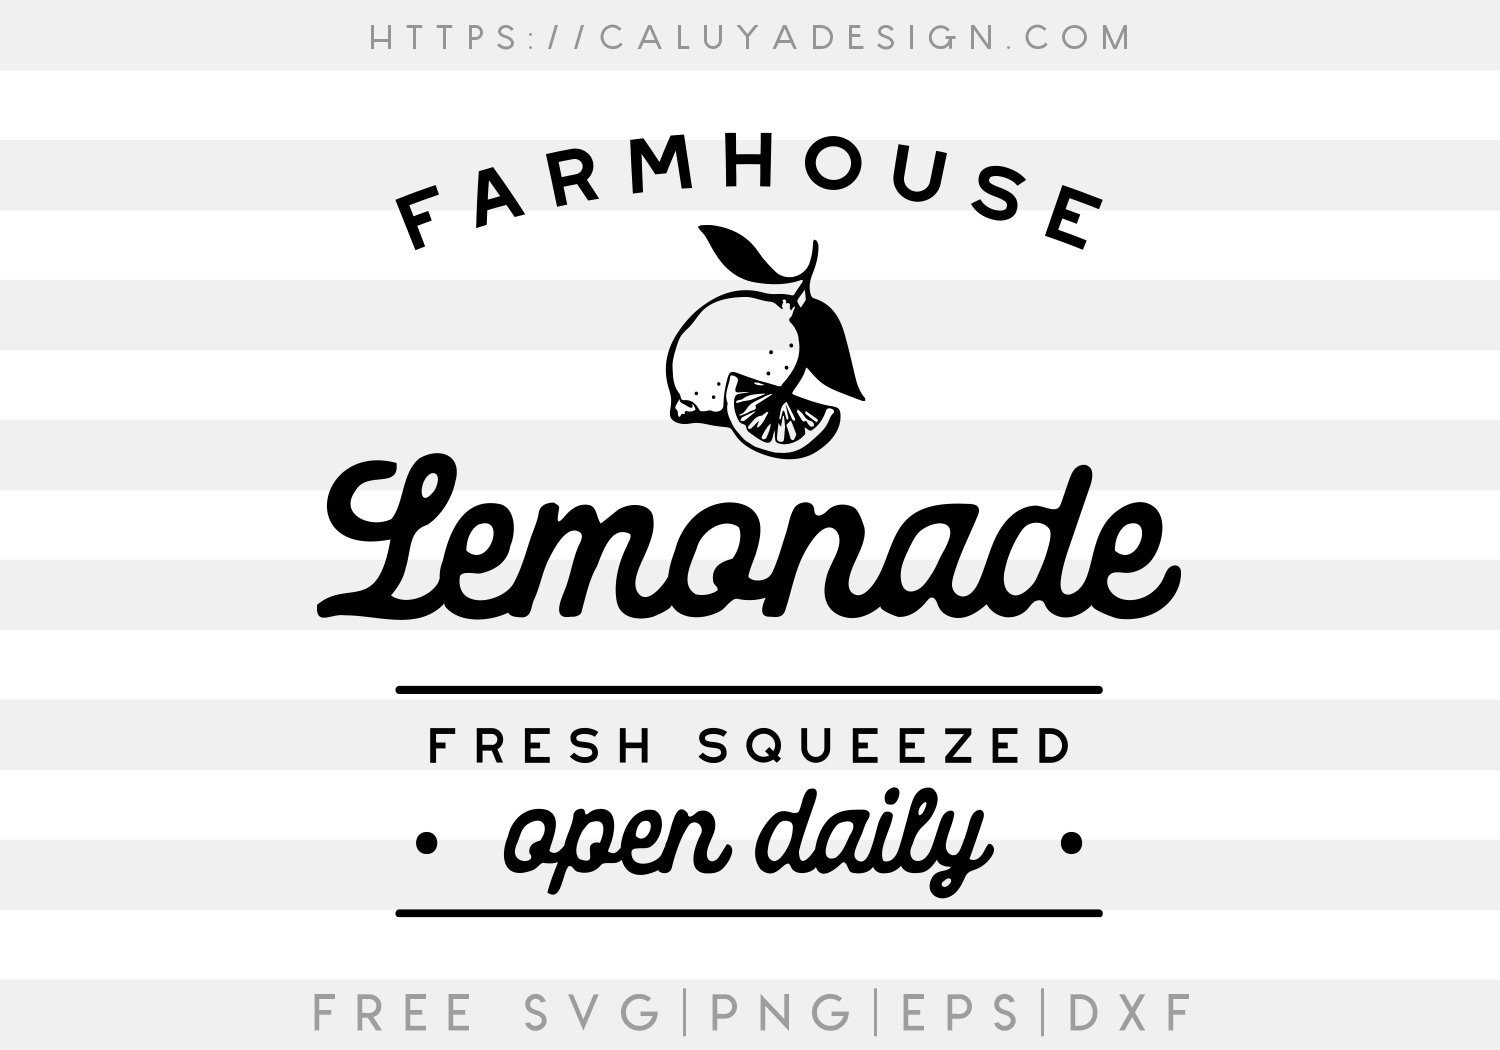 Free Farmhouse Lemonade Design SVG Cut File